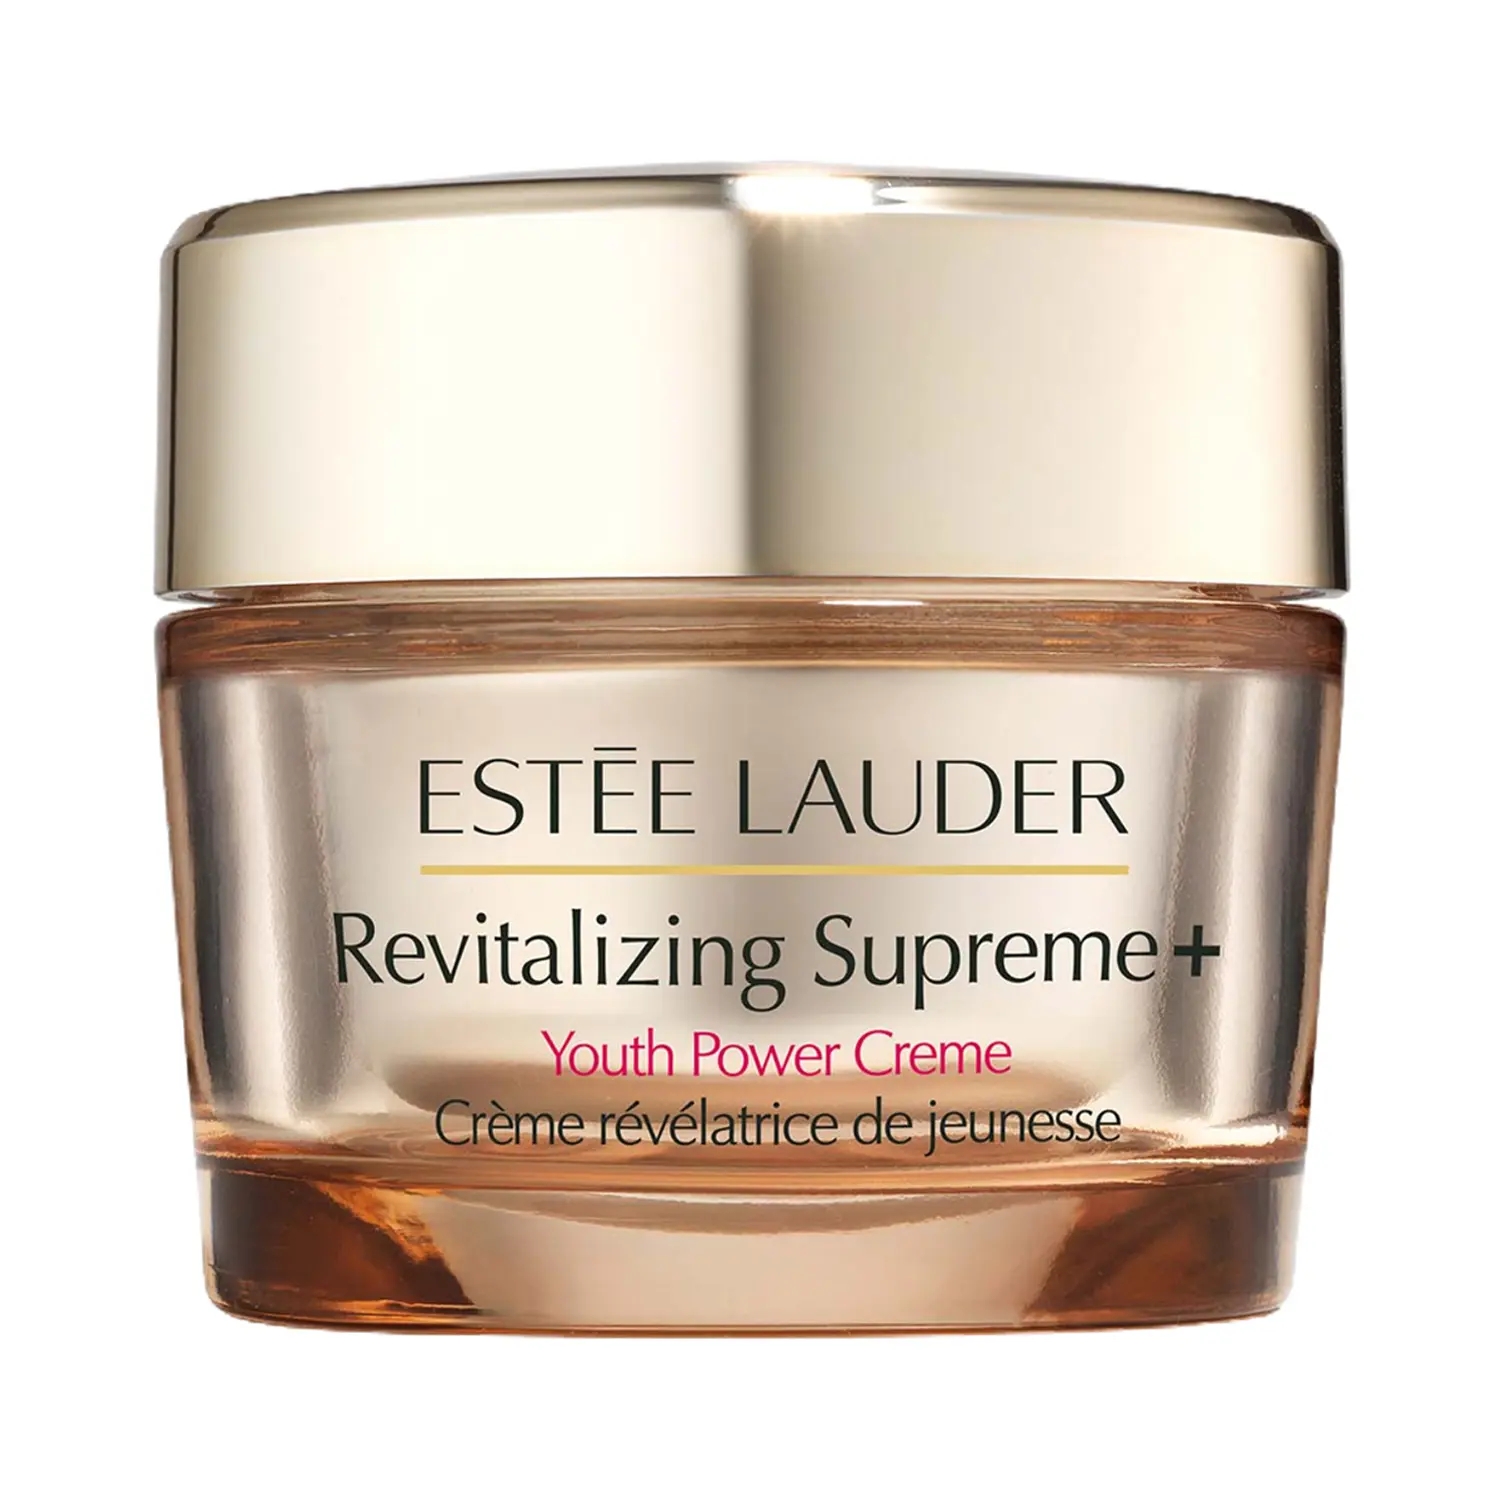 Estee Lauder Revitalizing Supreme+ Youth Power Creme (15ml)